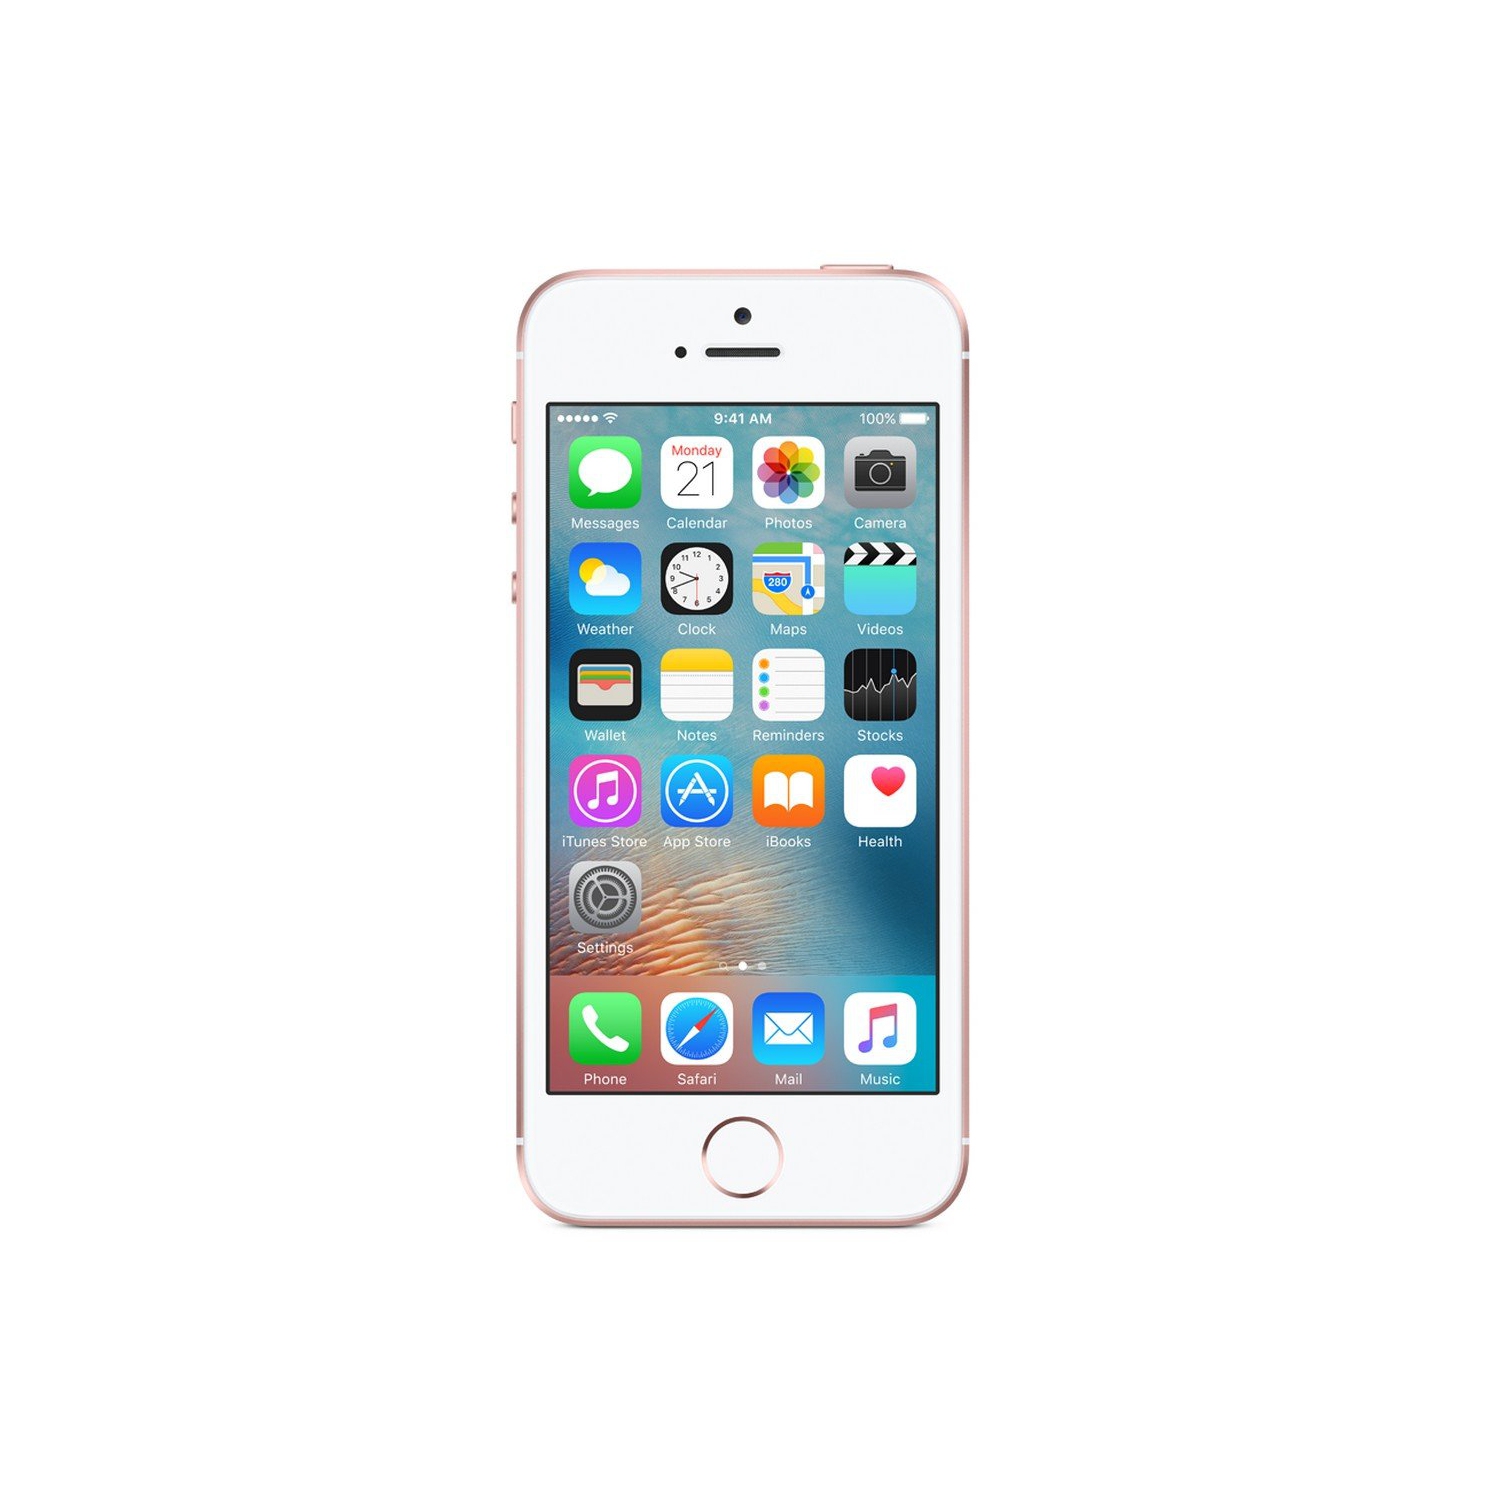 Apple iPhone SE 16GB - Unlocked Smartphone - Rose Gold - Open Box 